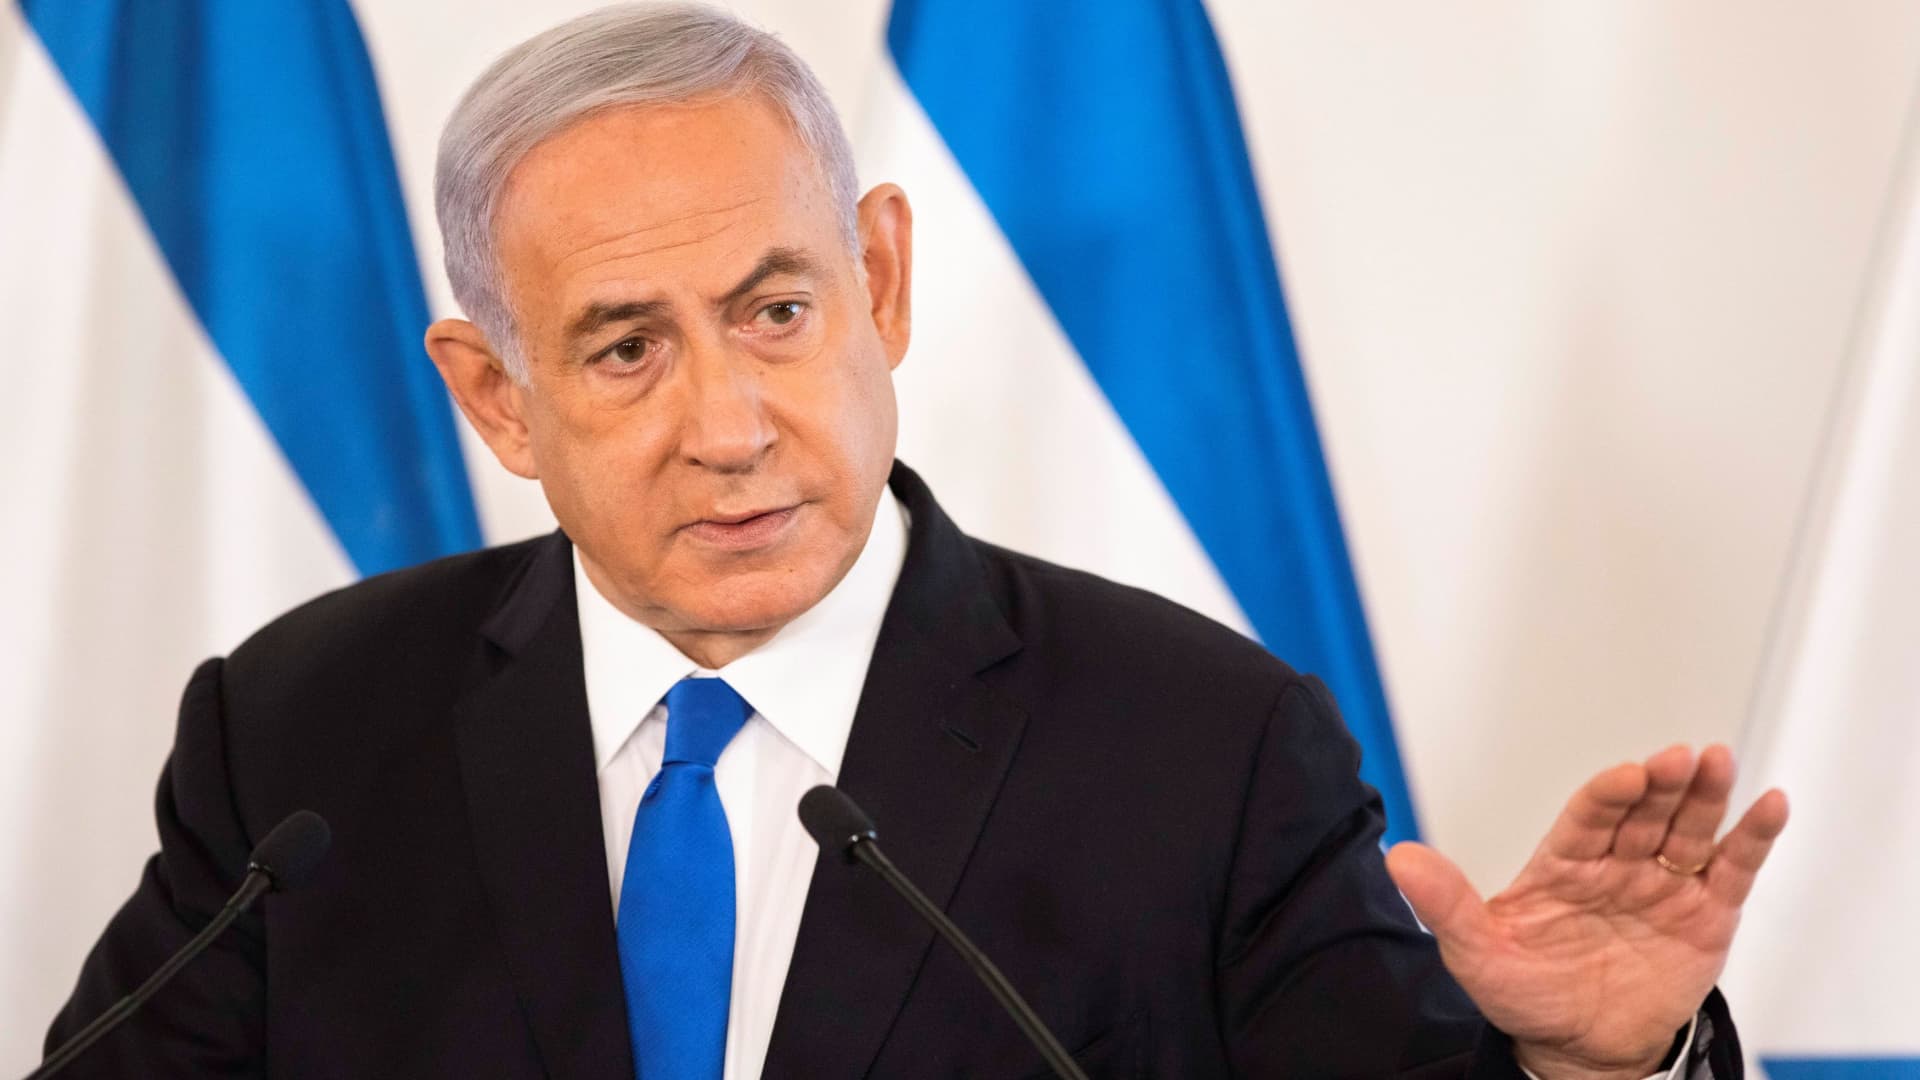 Israeli Prime Minister Benjamin Netanyahu gestures as he speaks during a briefing to ambassadors to Israel at a military base in Tel Aviv, Israel May 19, 2021.